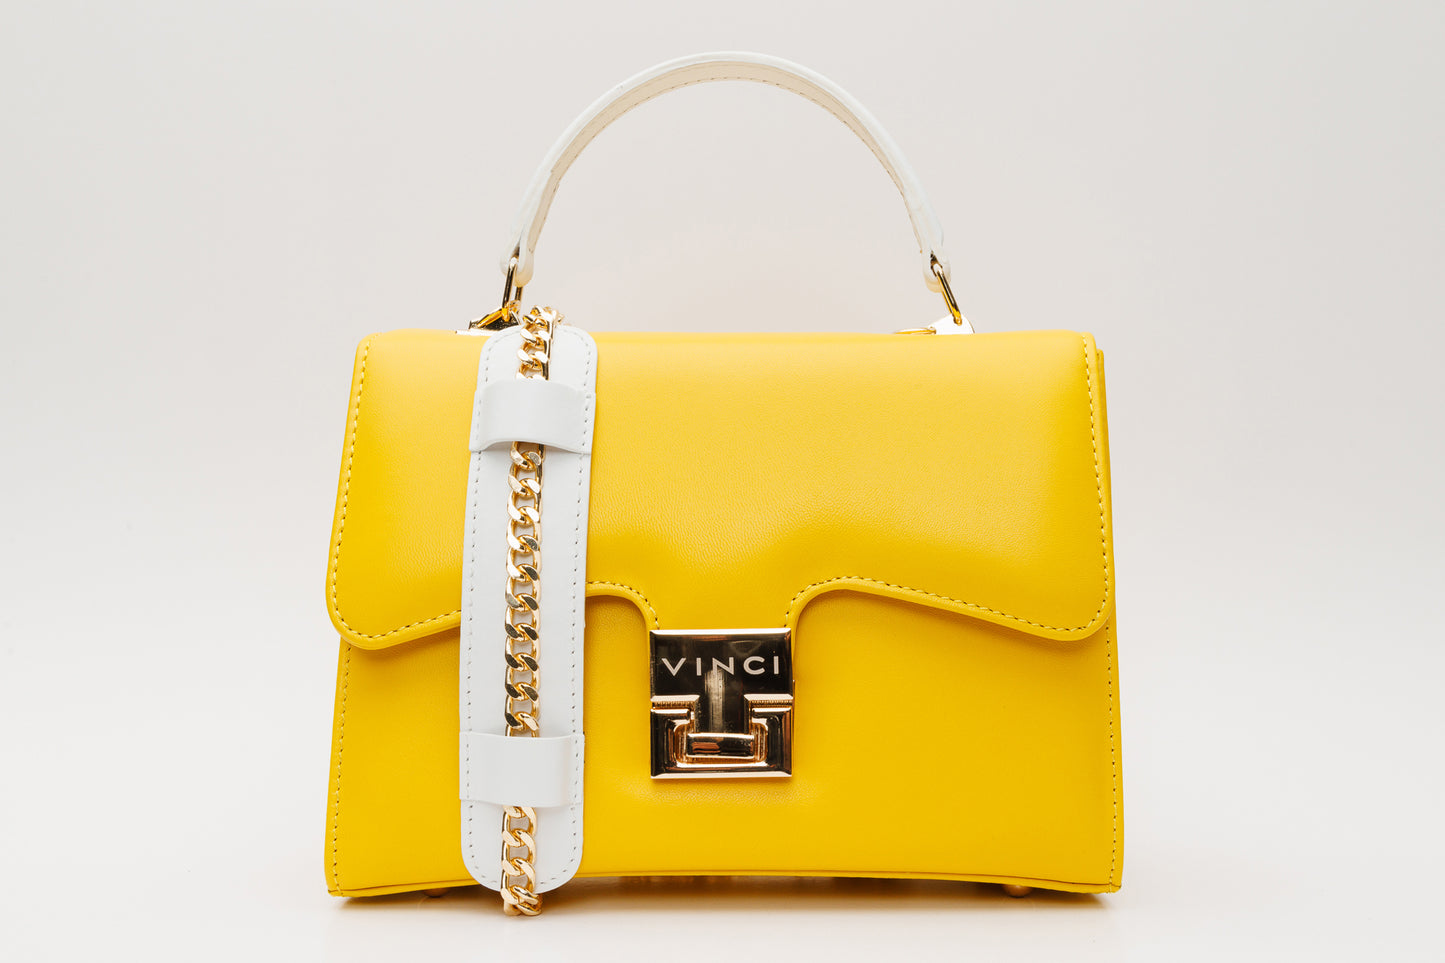 The Duffryn Yellow Leather Handbag